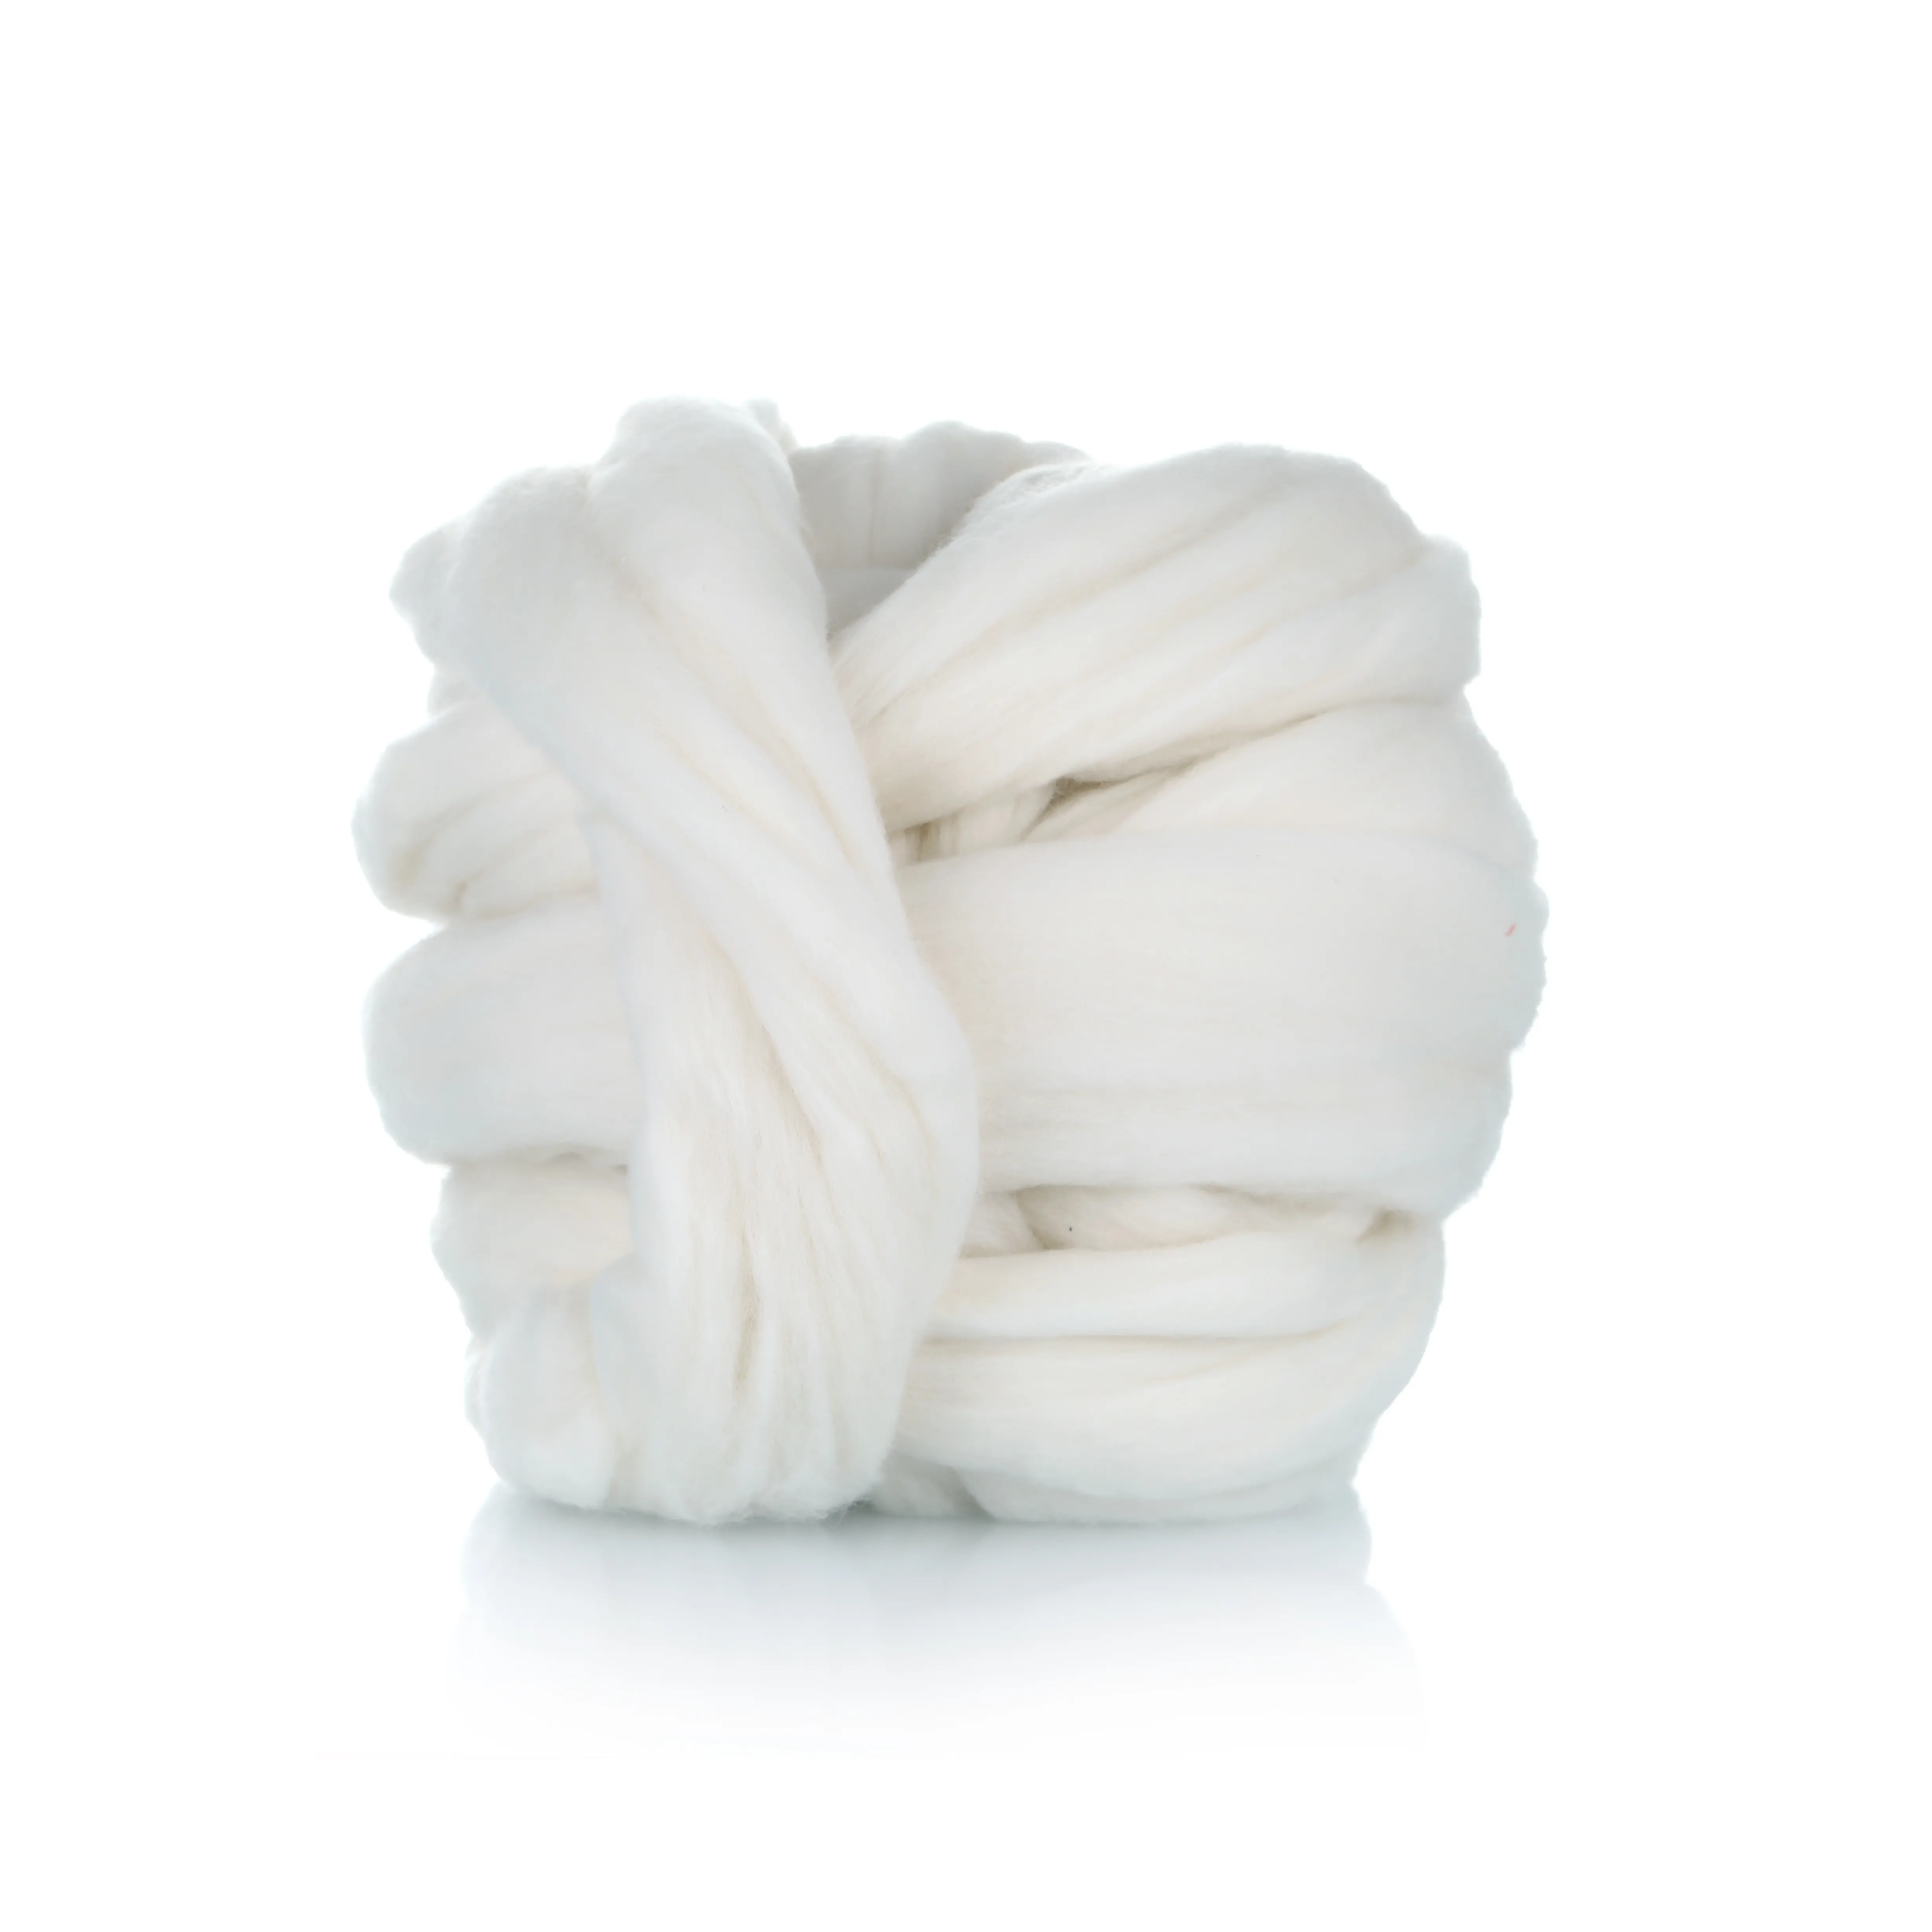 wholesale wool tops 16.5mic-29.0mic sheep wool roving for felting natural